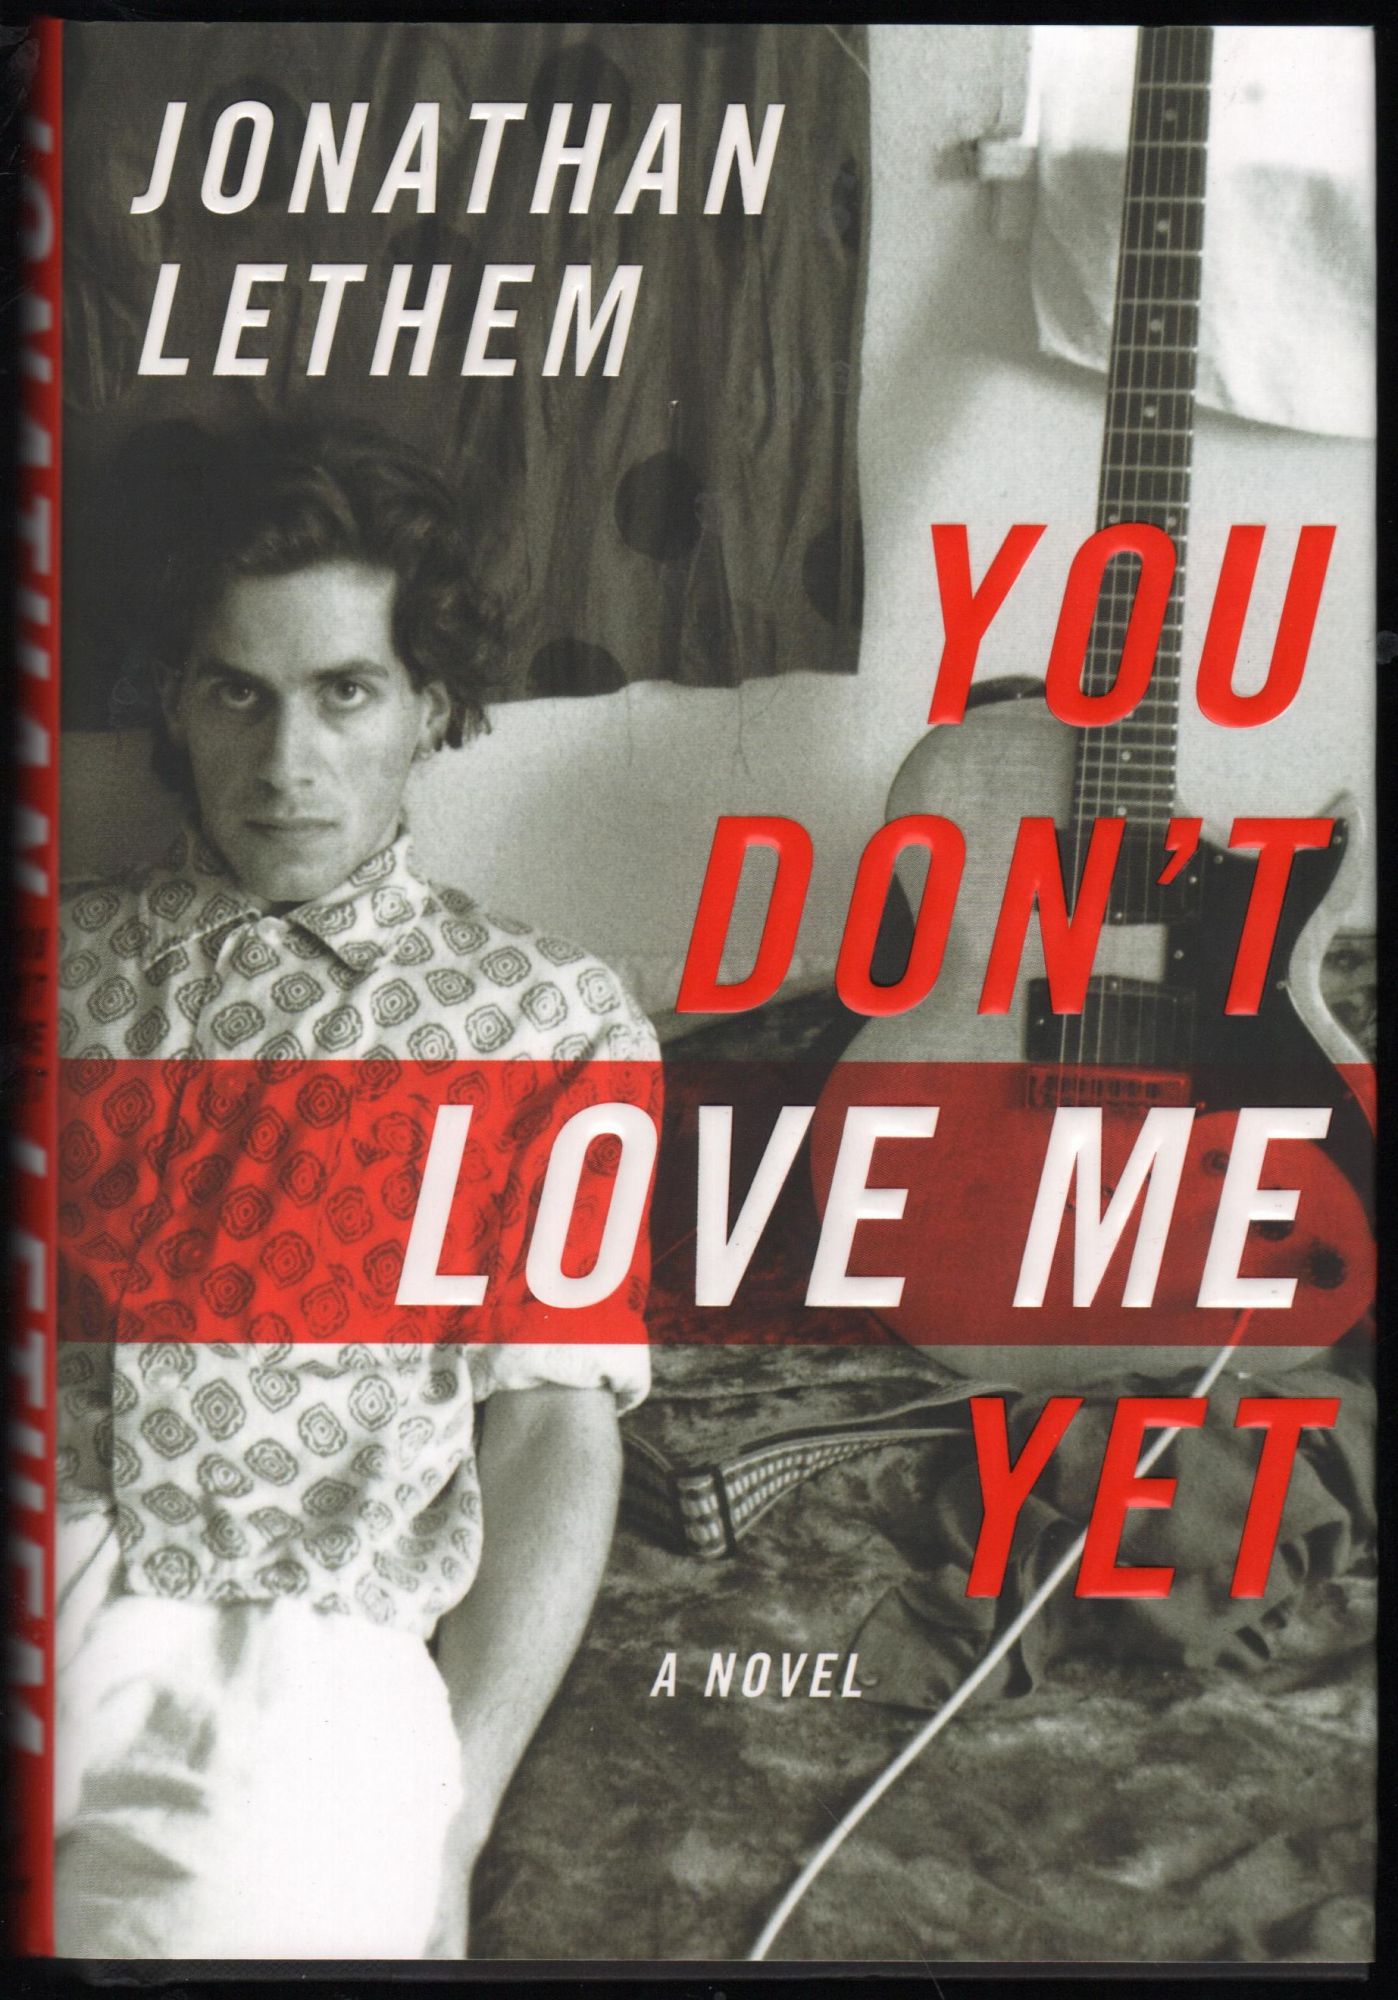 Jonathan Lethem: You don't love me yet (2007, Doubleday)